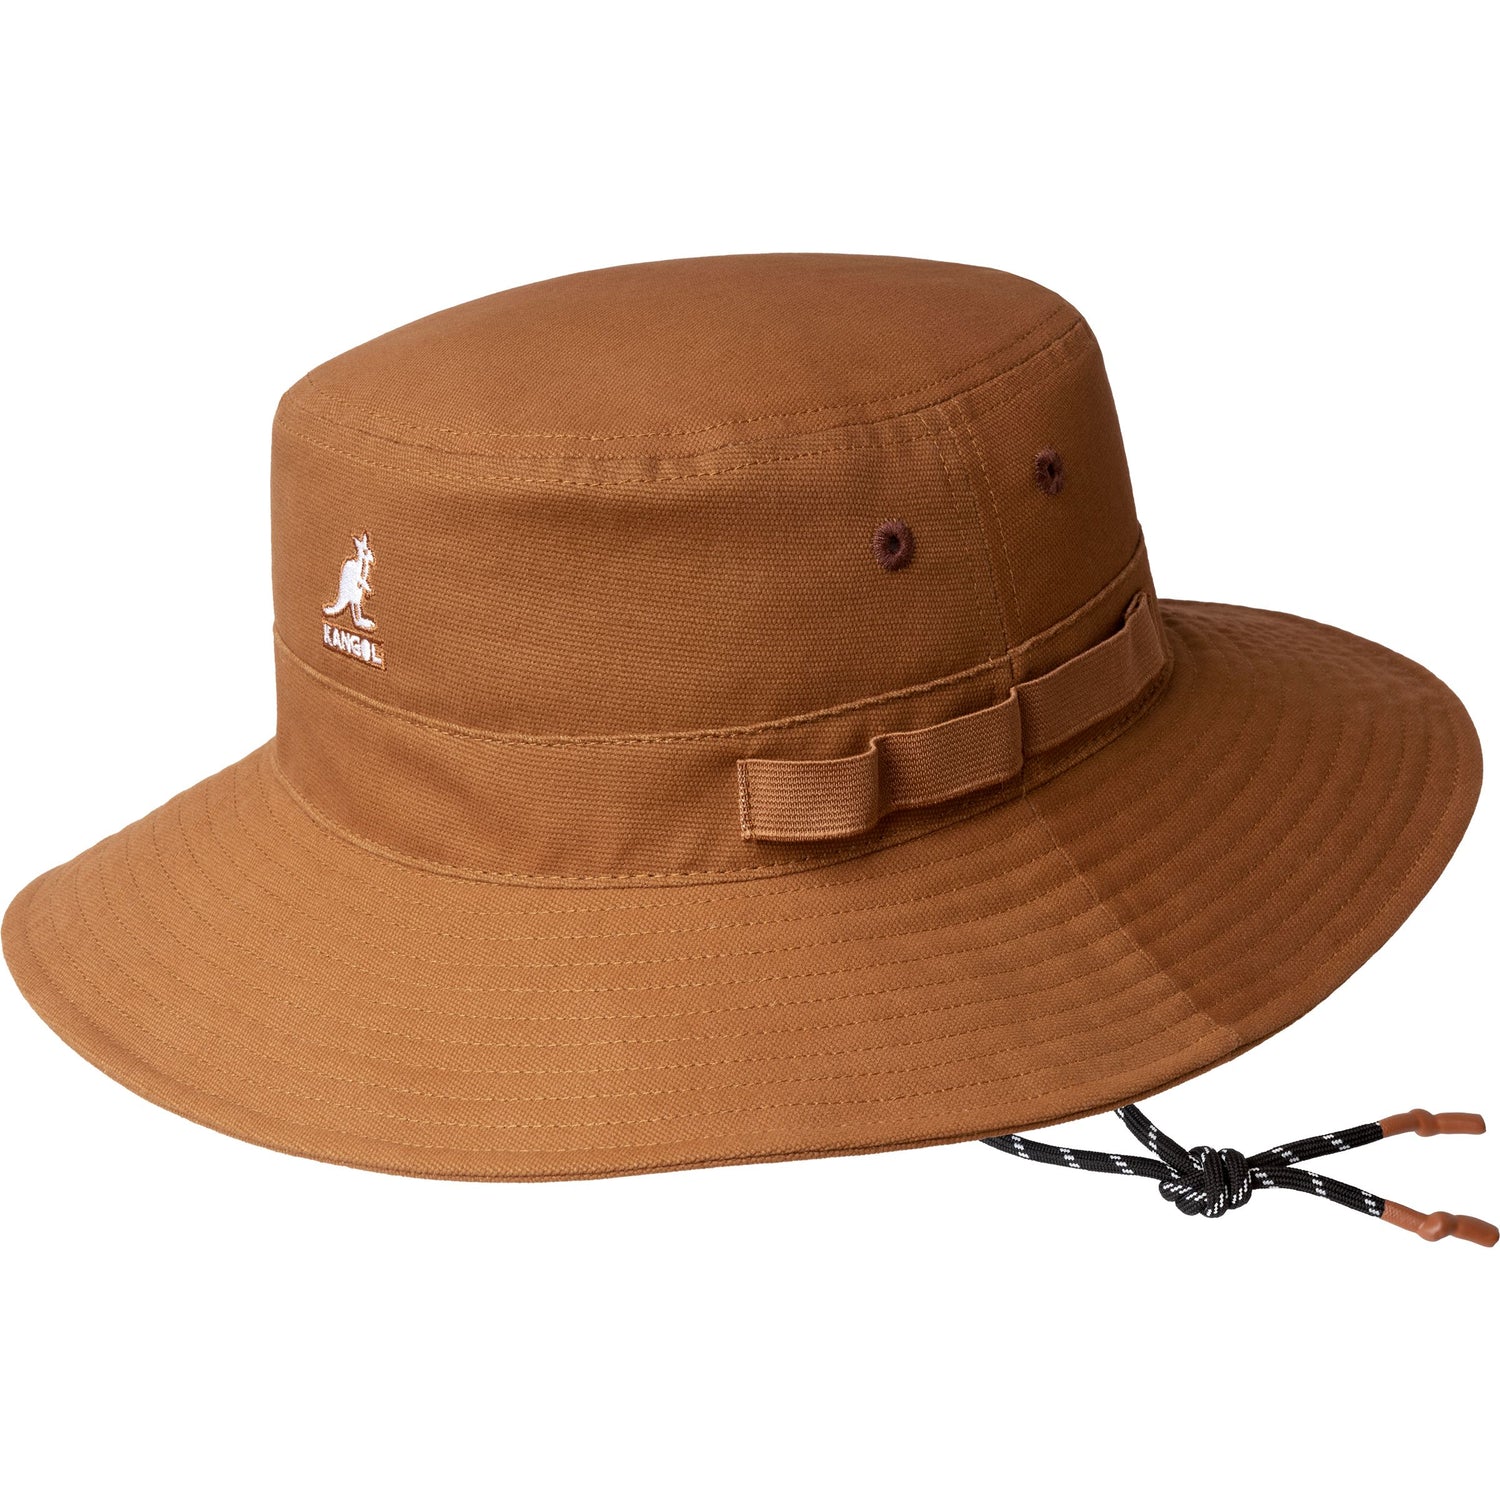 Kangol Utility Cords Jungle Hat - Tan